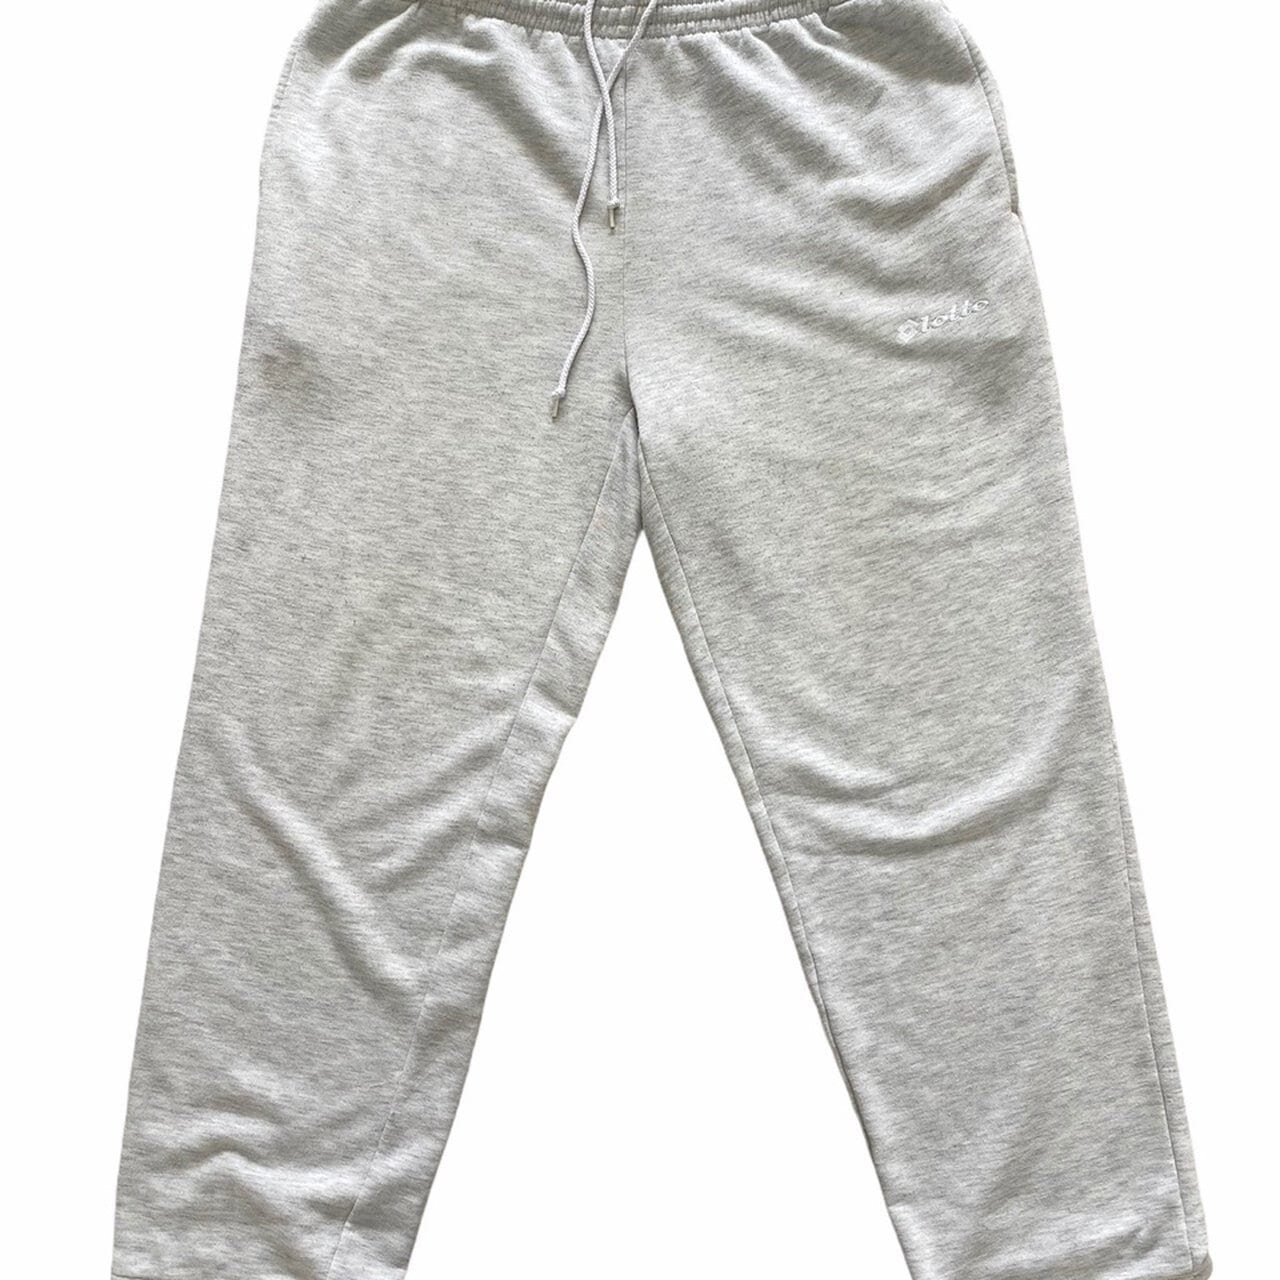 Mens Plain Fleece Jogger Drawstring Sweatpants Black/gray/charcoal 